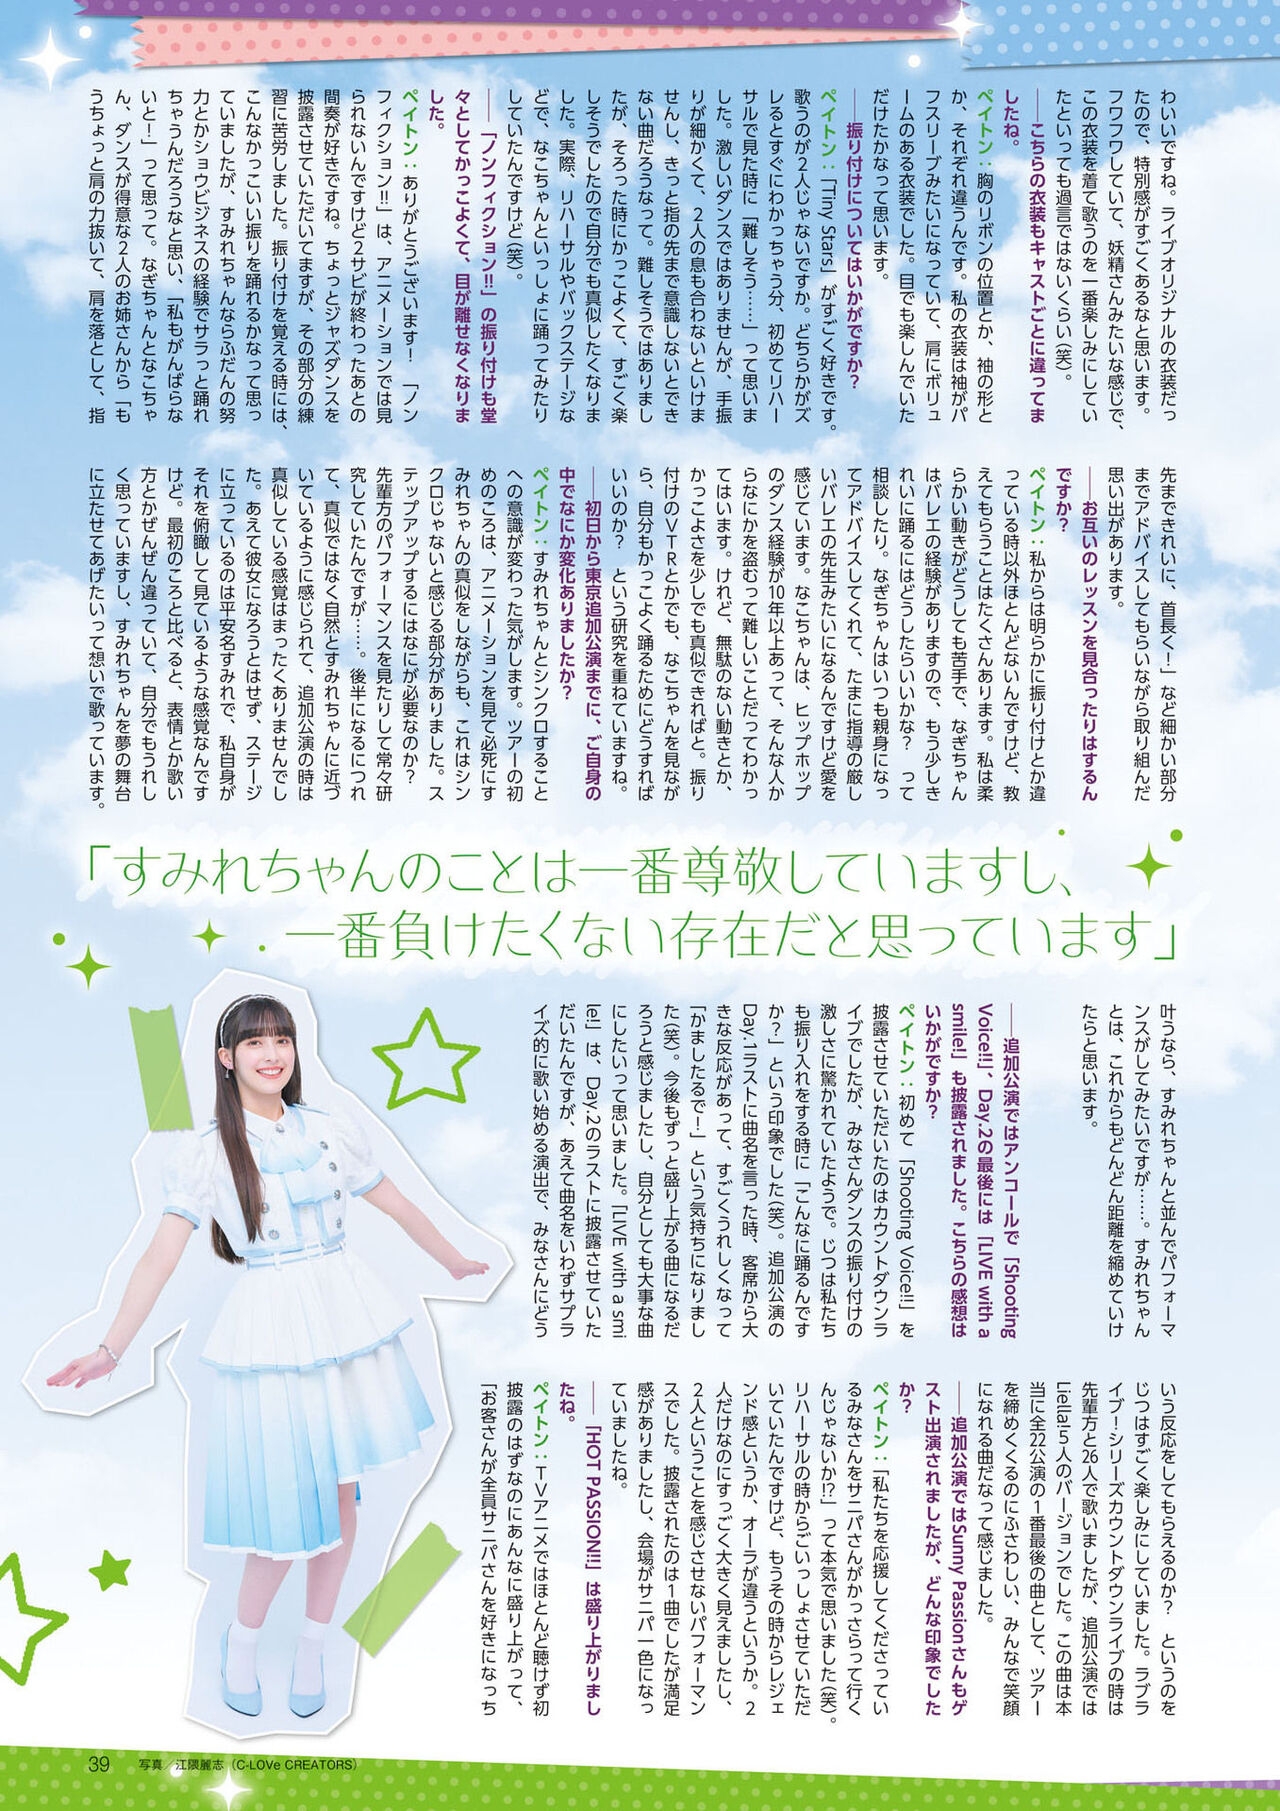 Dengeki G's Magazine #297 - April 2022 36